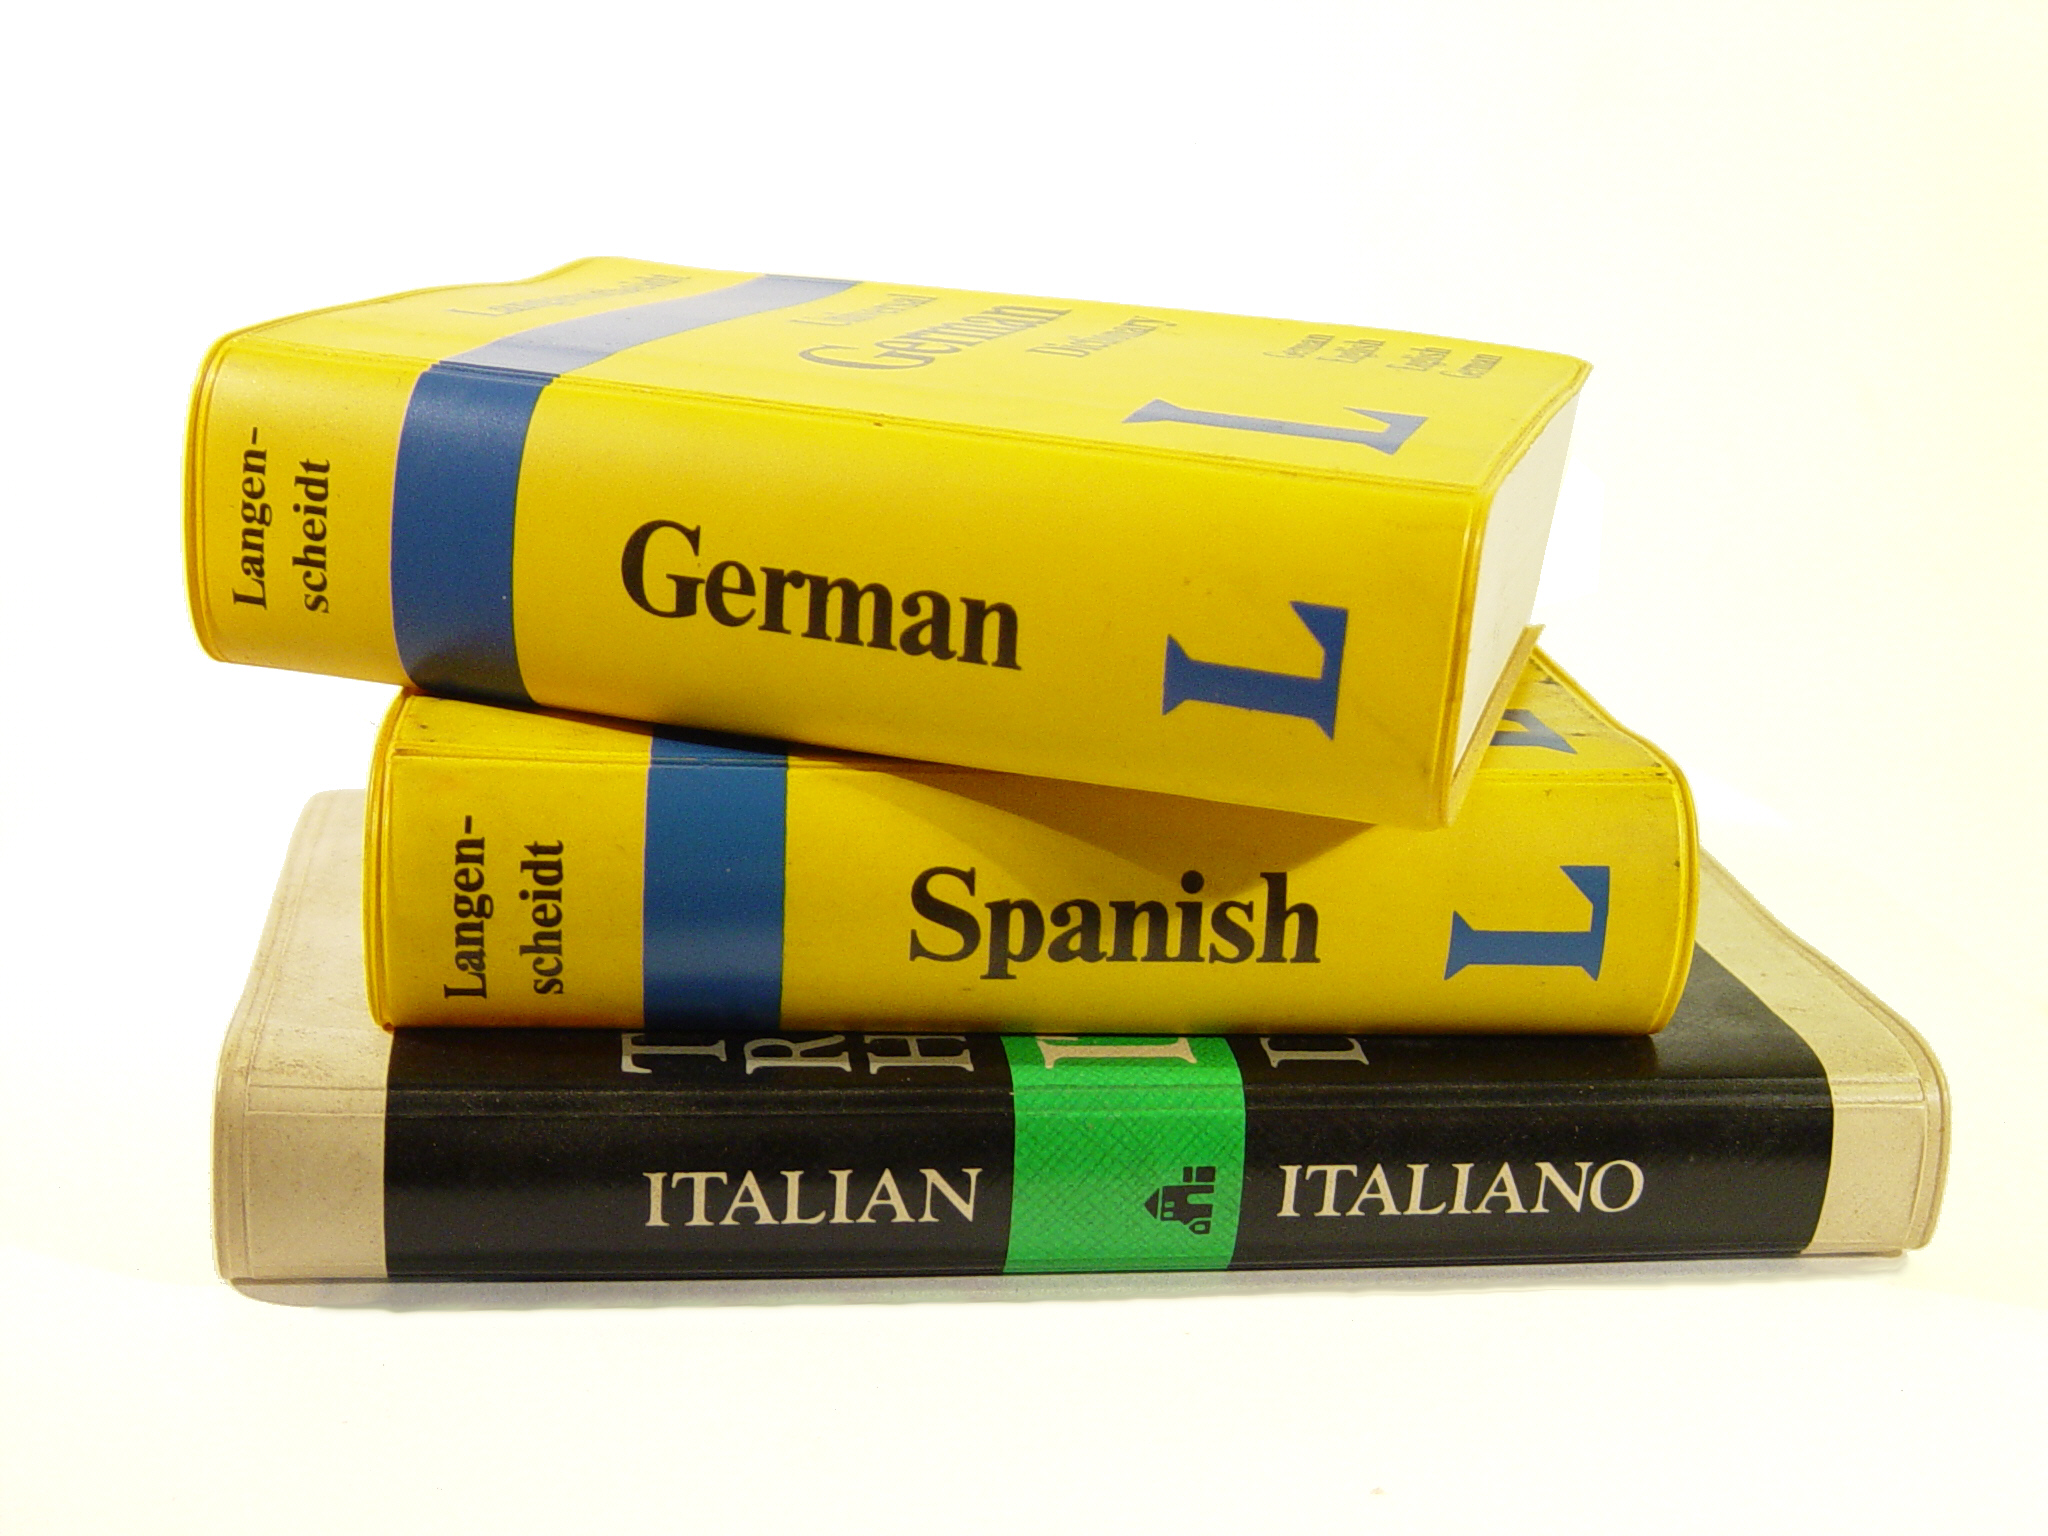 German, Spanish and Italian Dictionaries